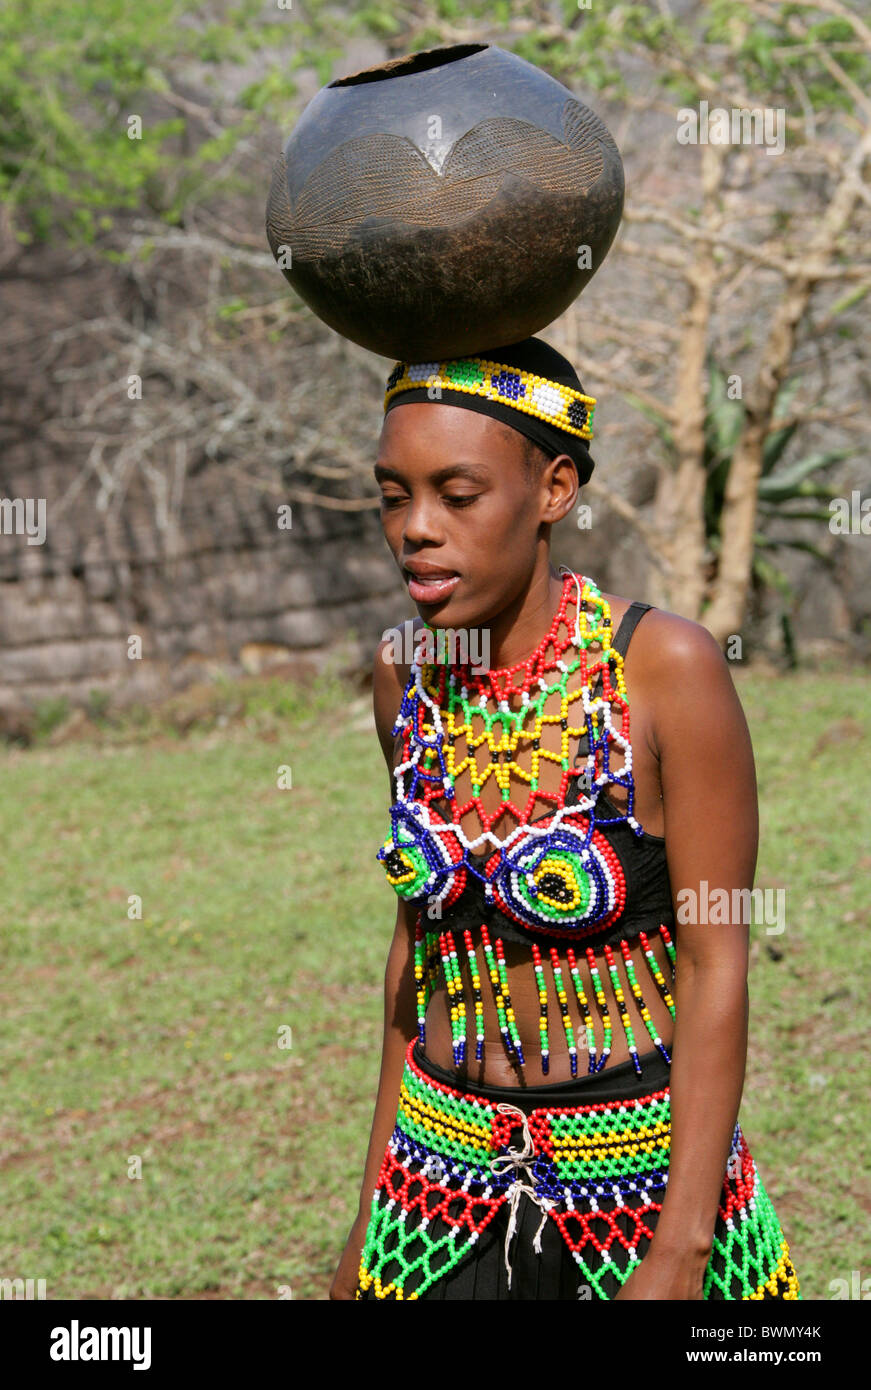 https://c8.alamy.com/comp/BWMY4K/young-zulu-maiden-in-traditional-beaded-dress-shakaland-zulu-village-BWMY4K.jpg